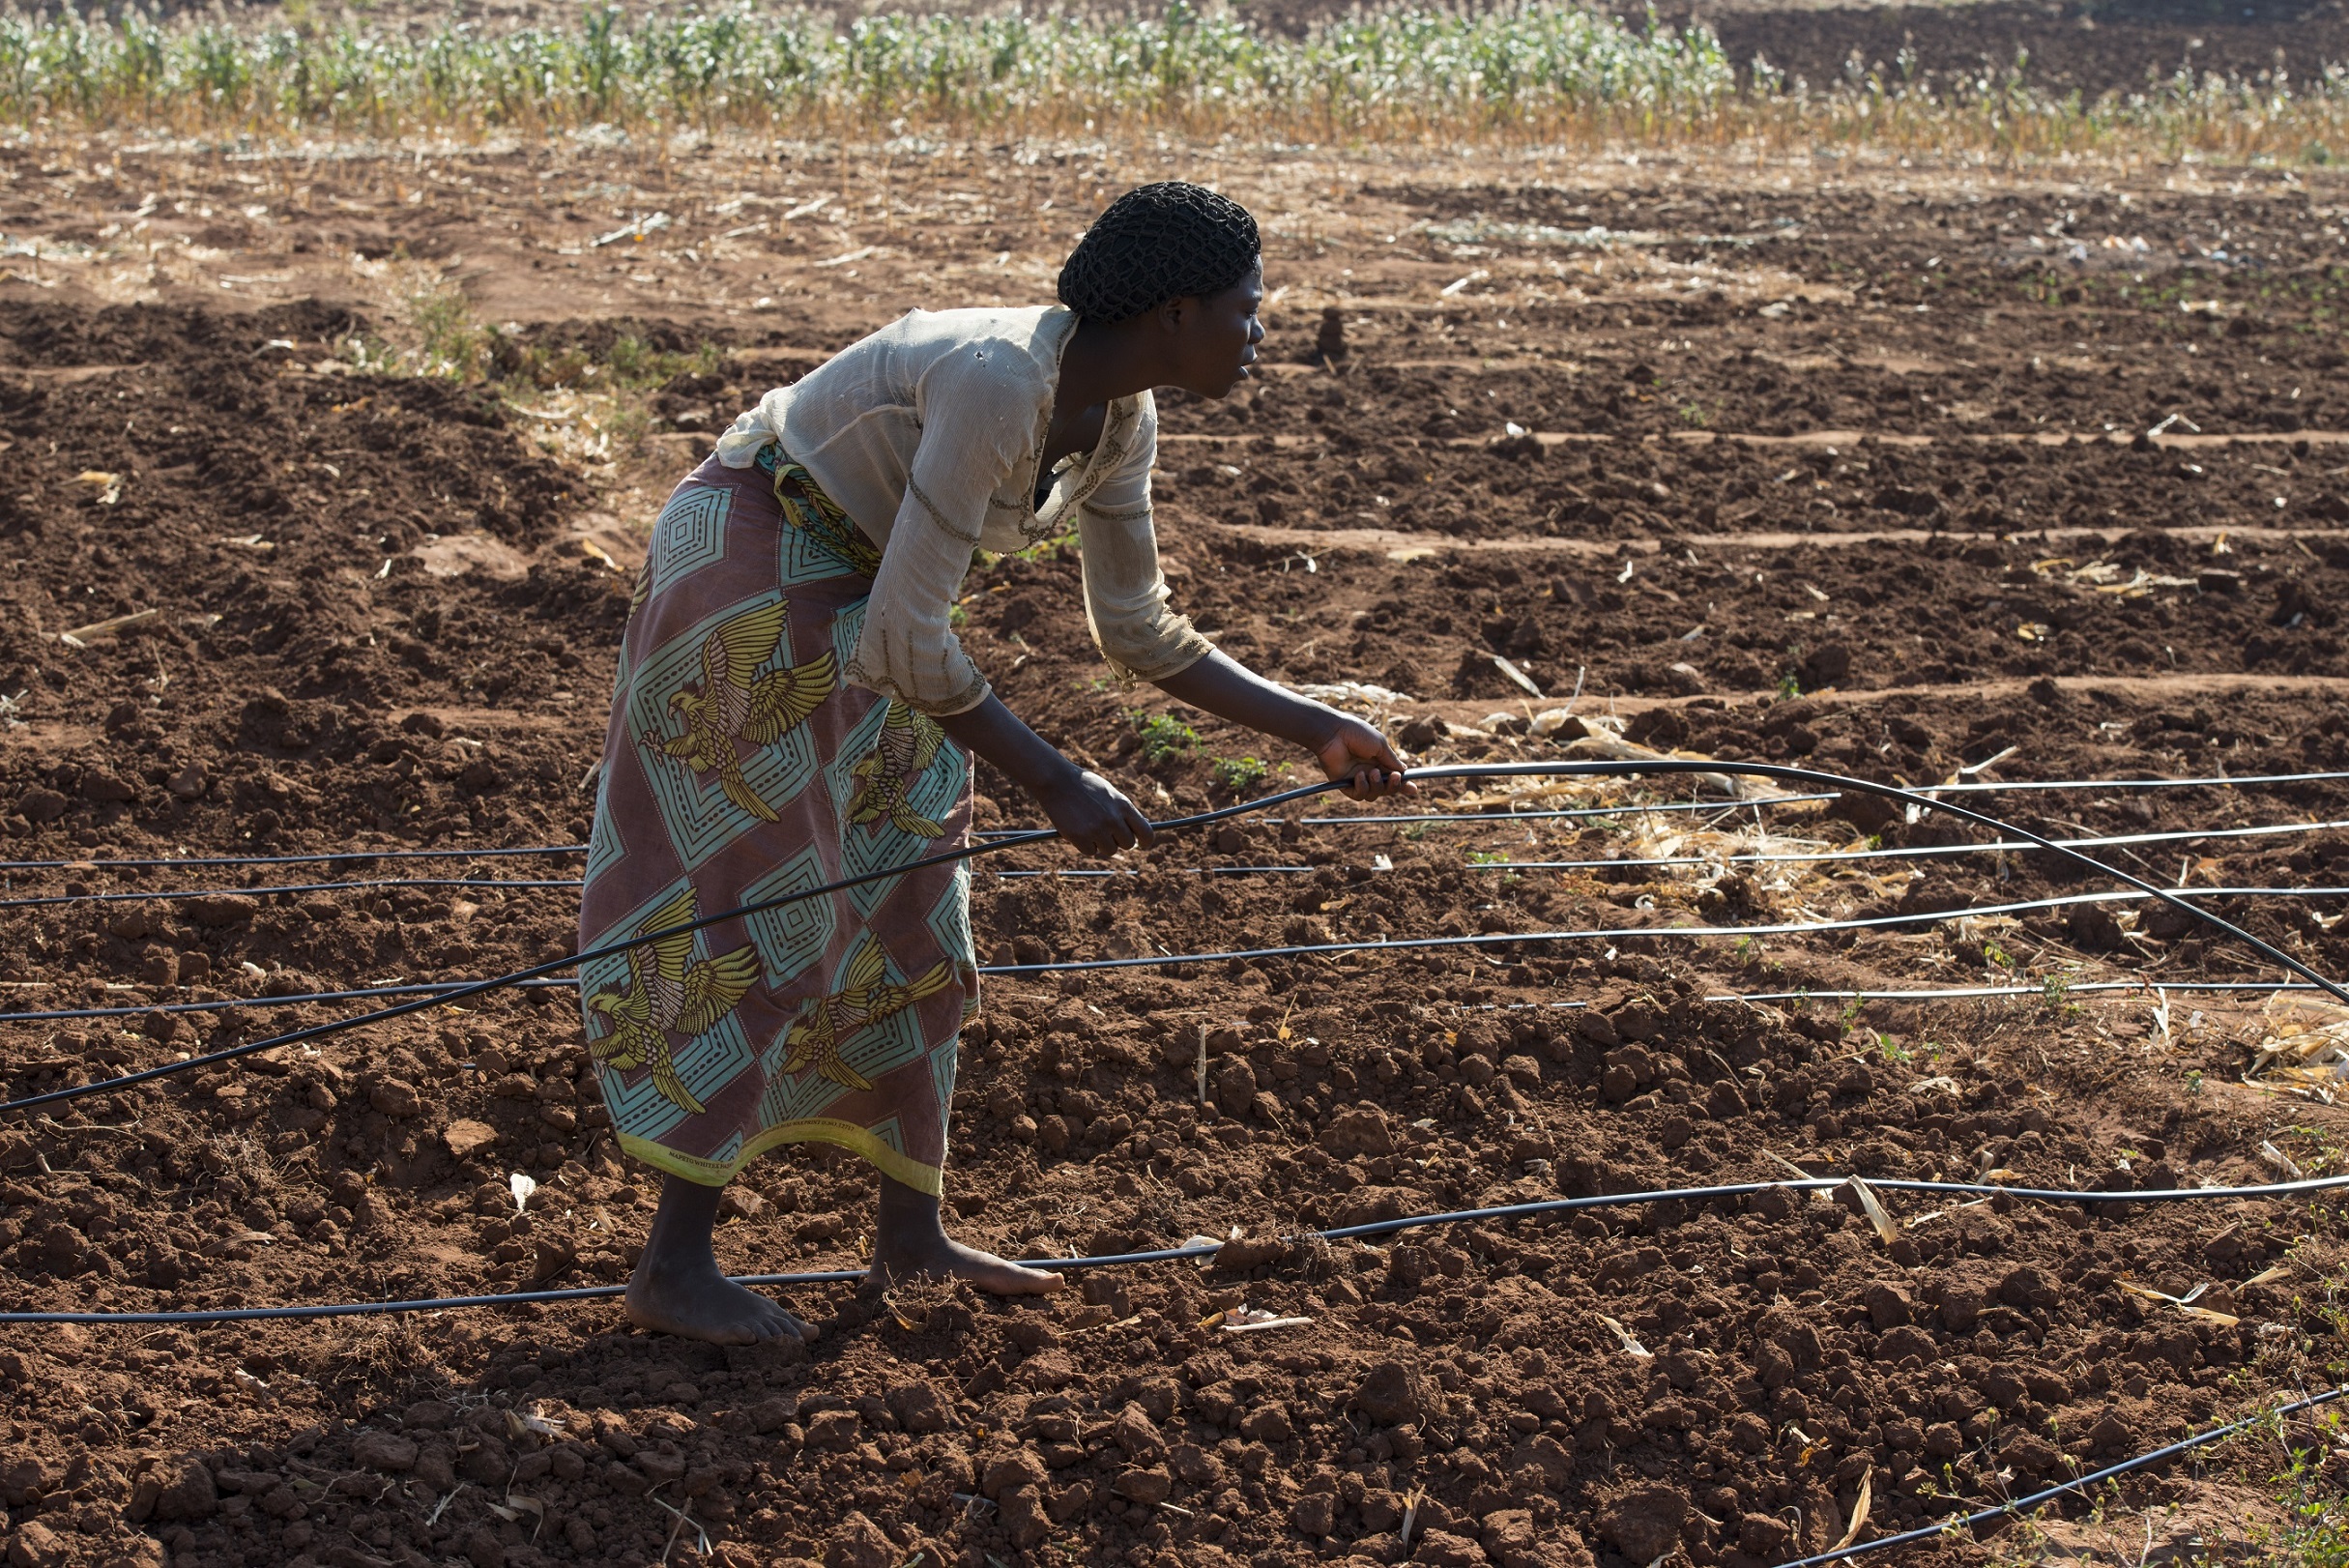 Setting up a drip irrigation system in Malawi. © Jörg Böthling, GIZ